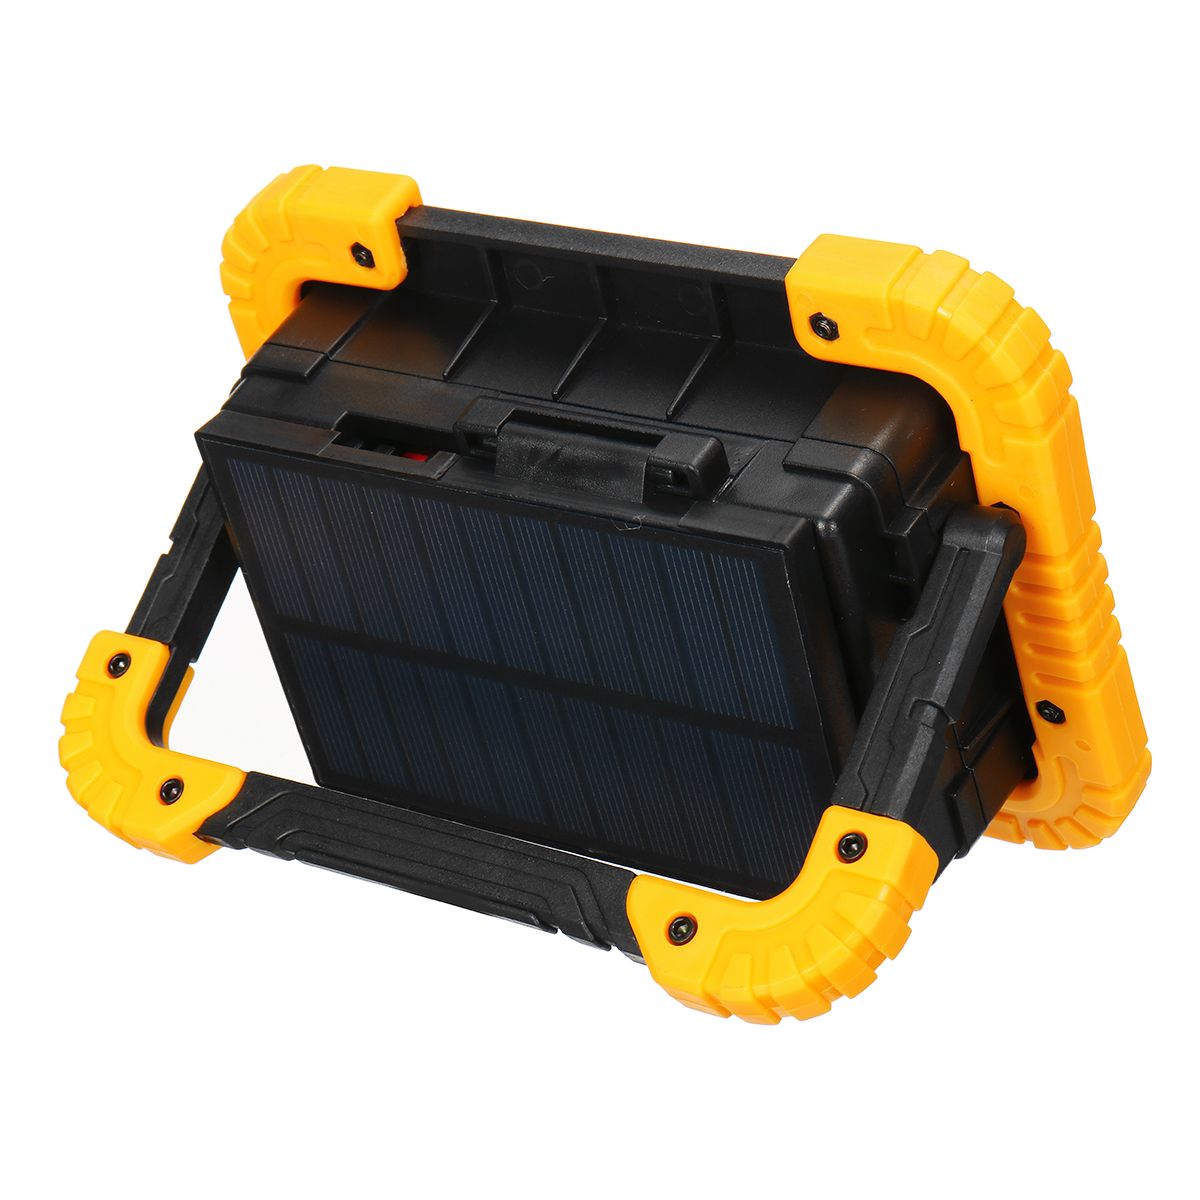 80W-LED-Solar-Flood-Light-Portable-Rechargeable-Outdoor-Garden-Work-Spot-Lamp-1723480